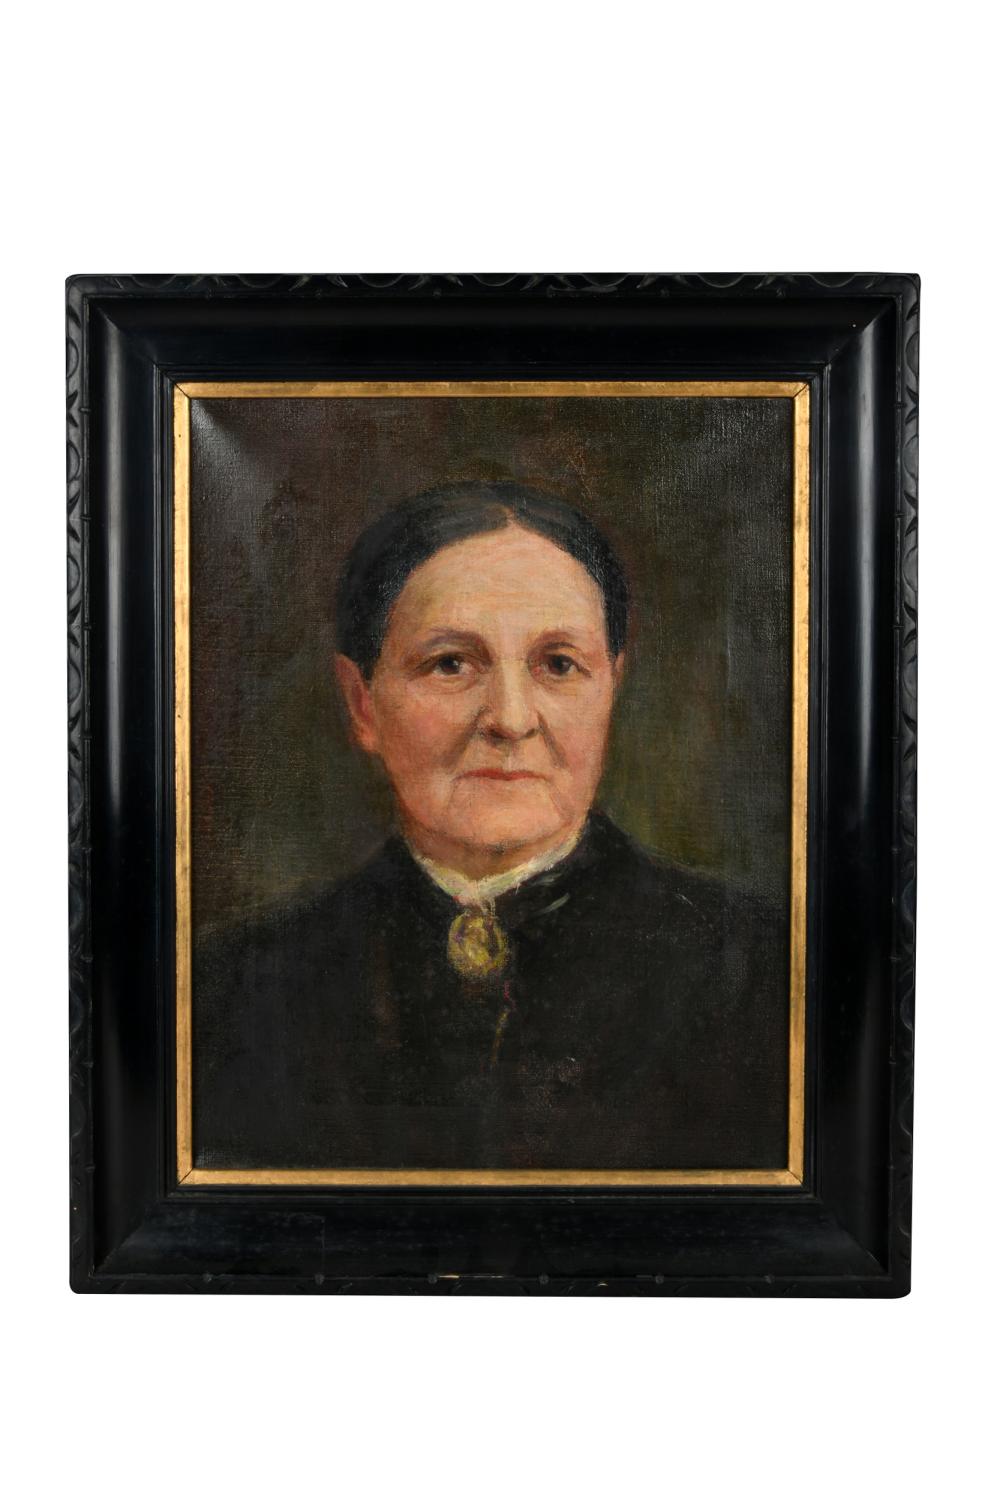 PORTRAIT OF A WOMANoil on canvas 332c77